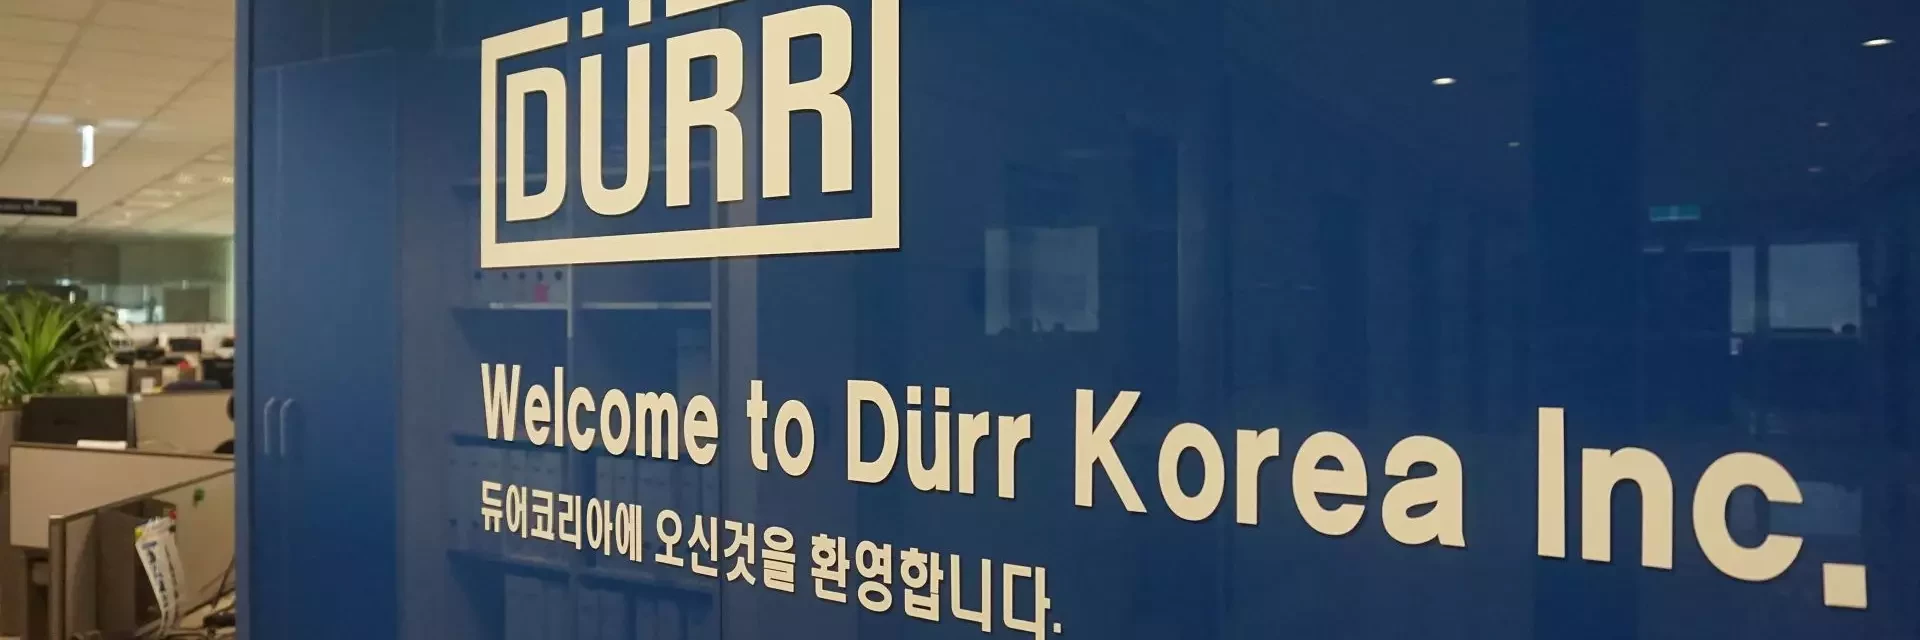 duerr location korea